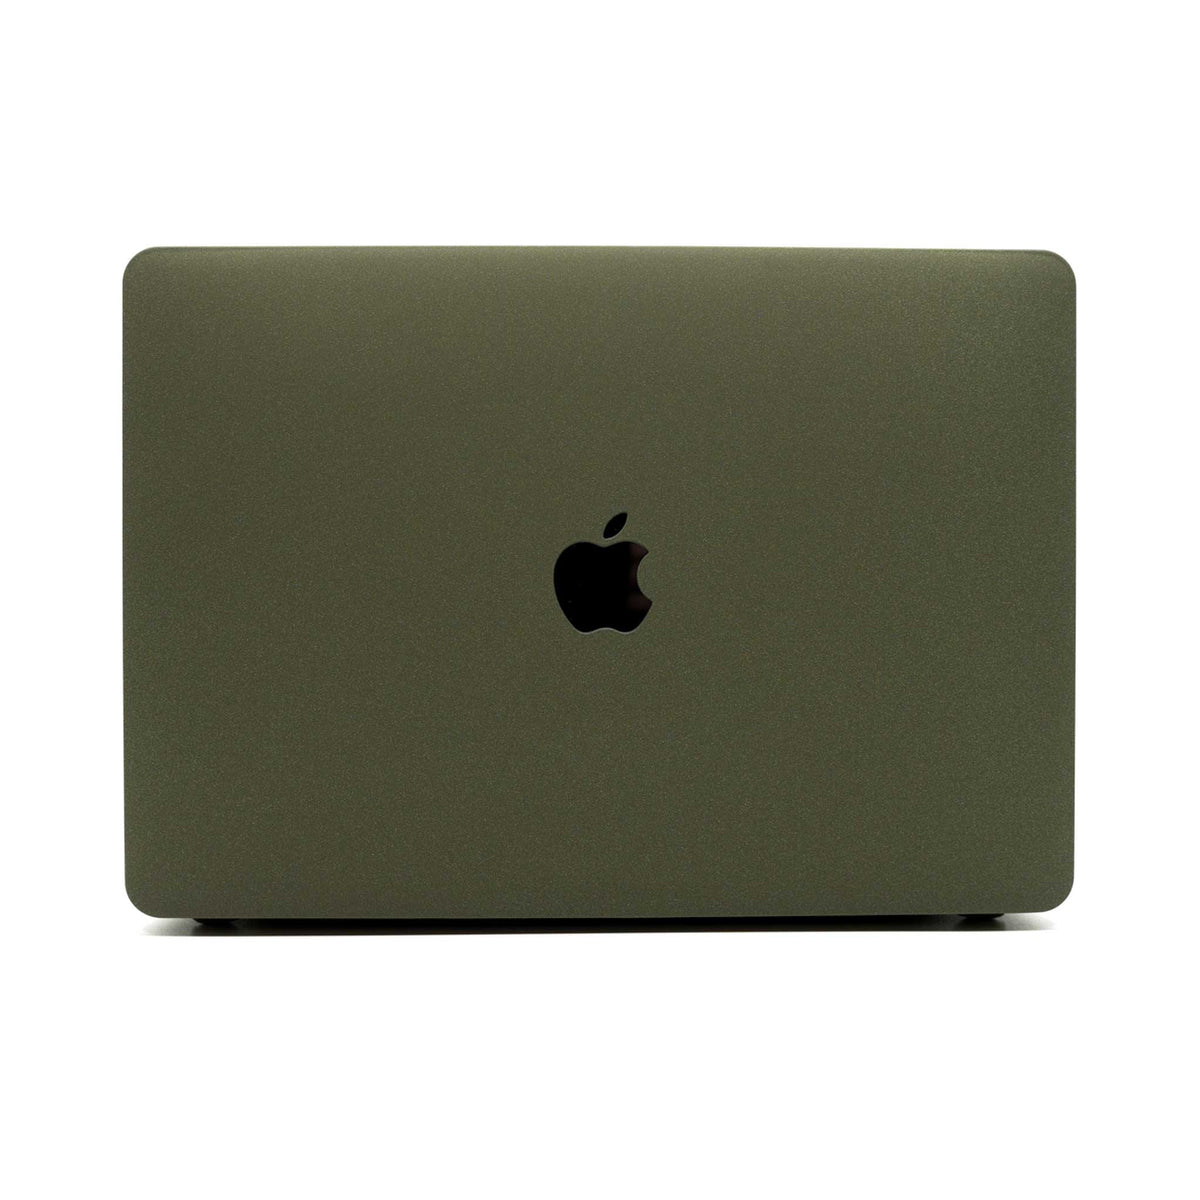 MacBook Cases & MacBook Skins - Uniqfind